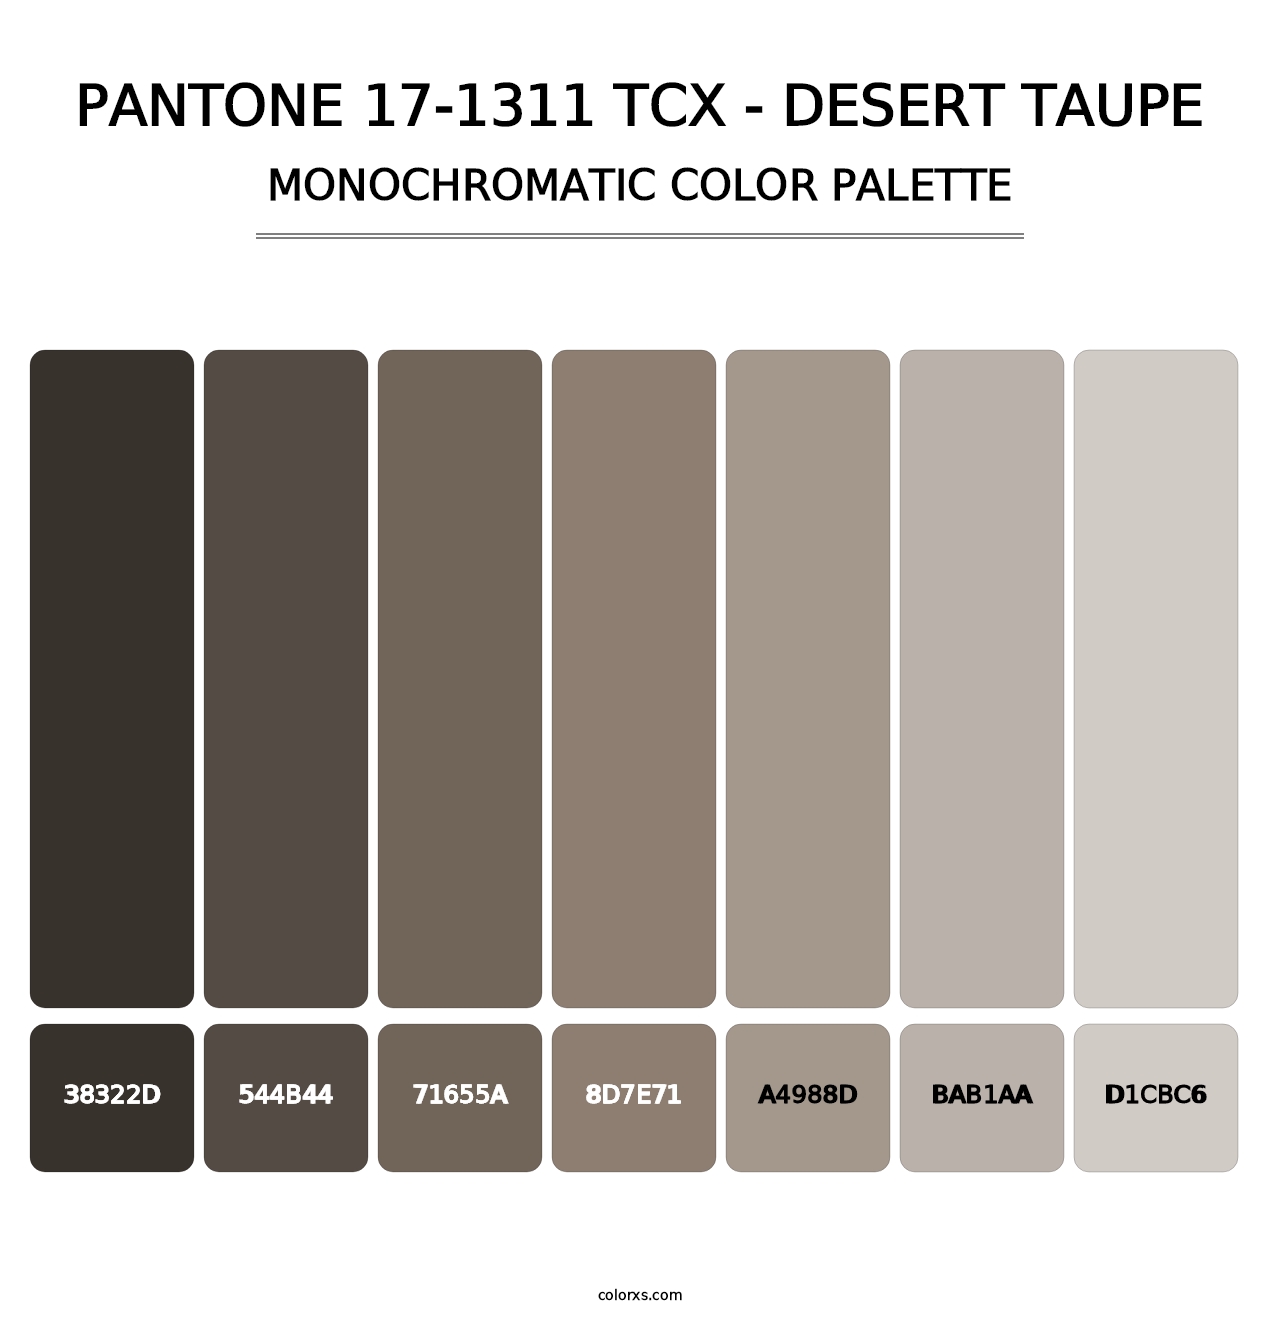 PANTONE 17-1311 TCX - Desert Taupe - Monochromatic Color Palette